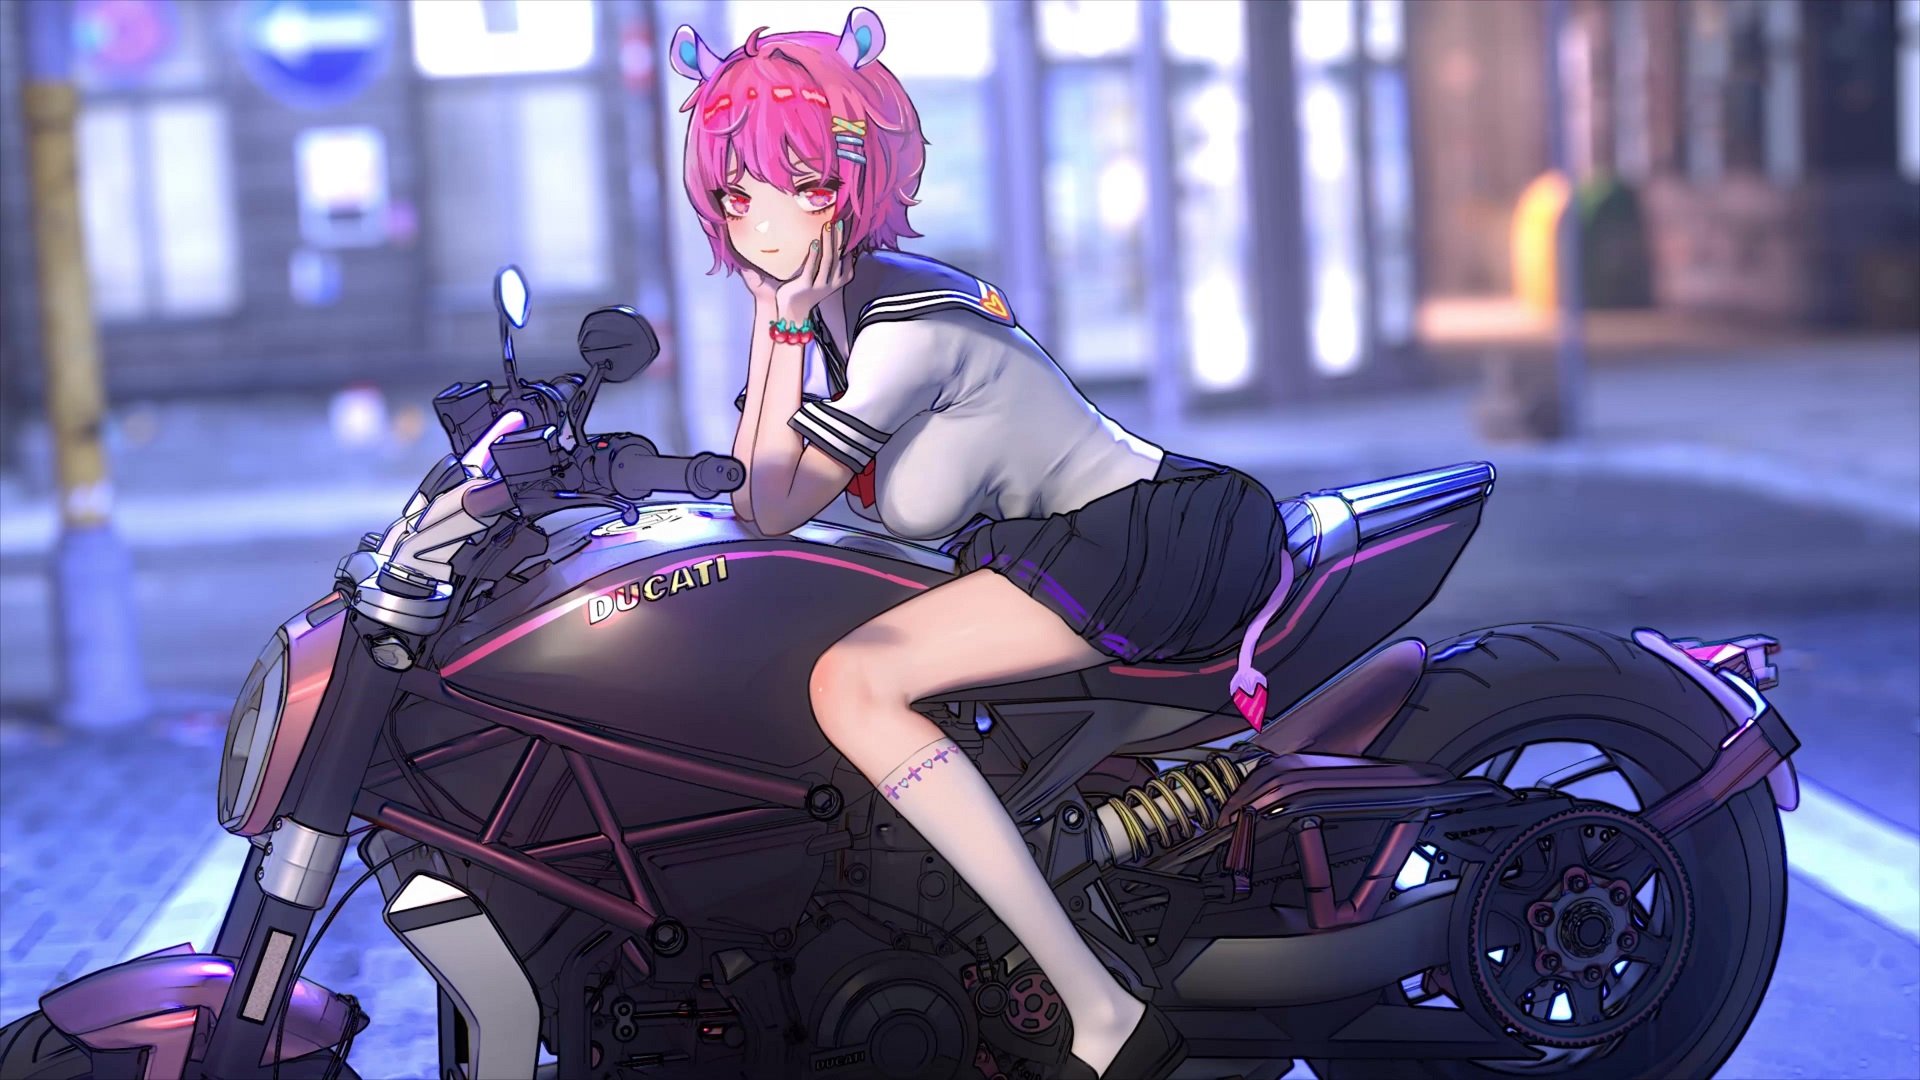 Anime Girl Motorcycle Live Wallpaper